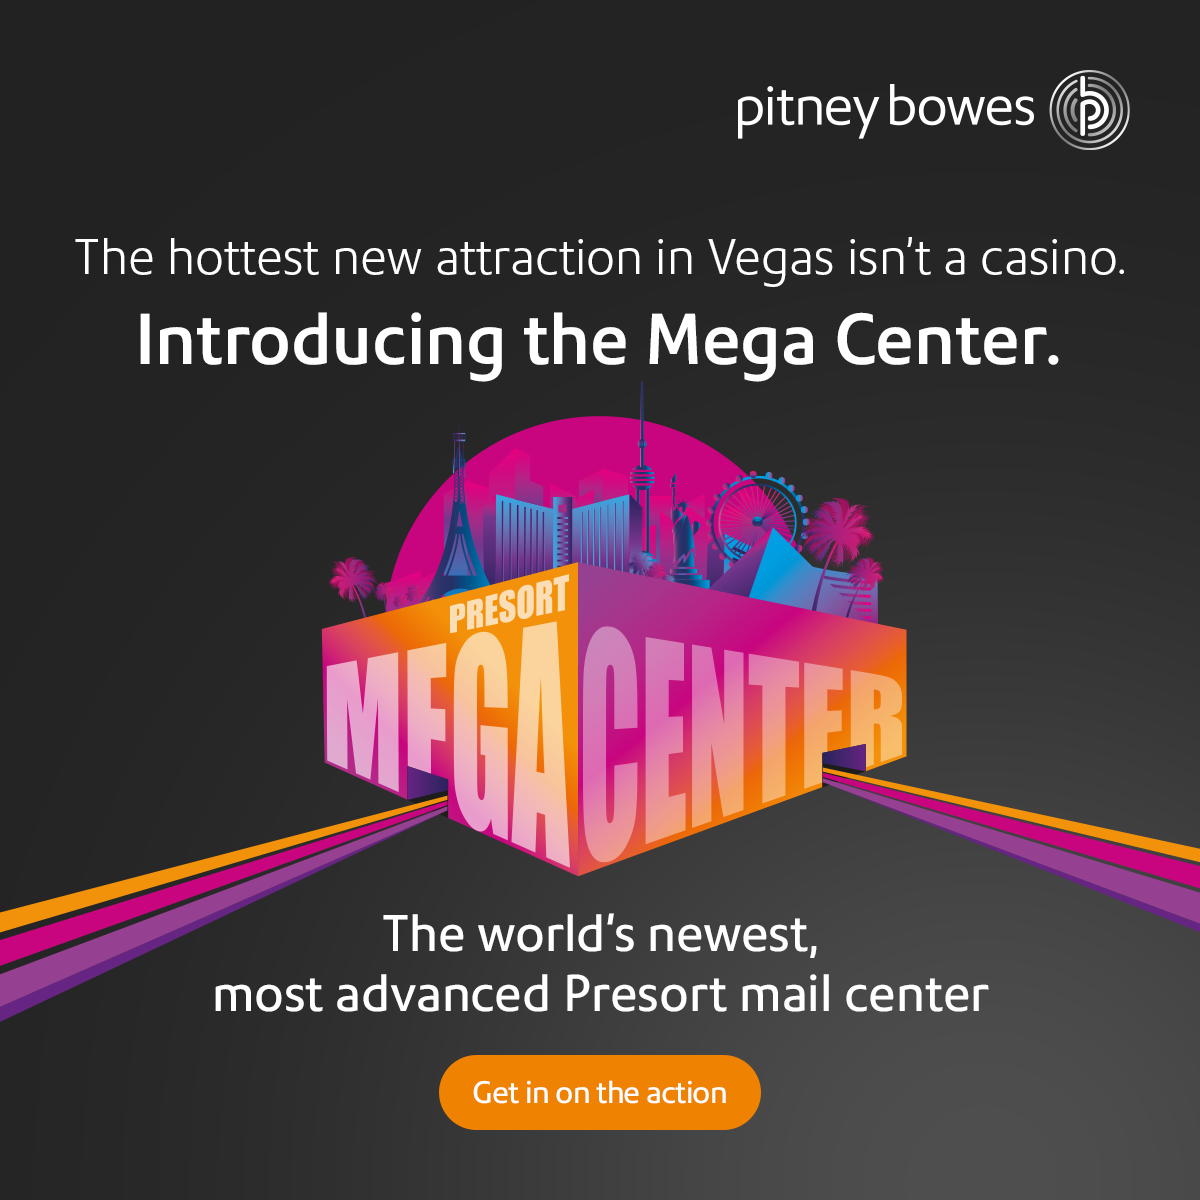 Pitney Bowes Presort Services Las Vegas Mega Center Introductory Campaign - Joseph Ehlinger copywriter